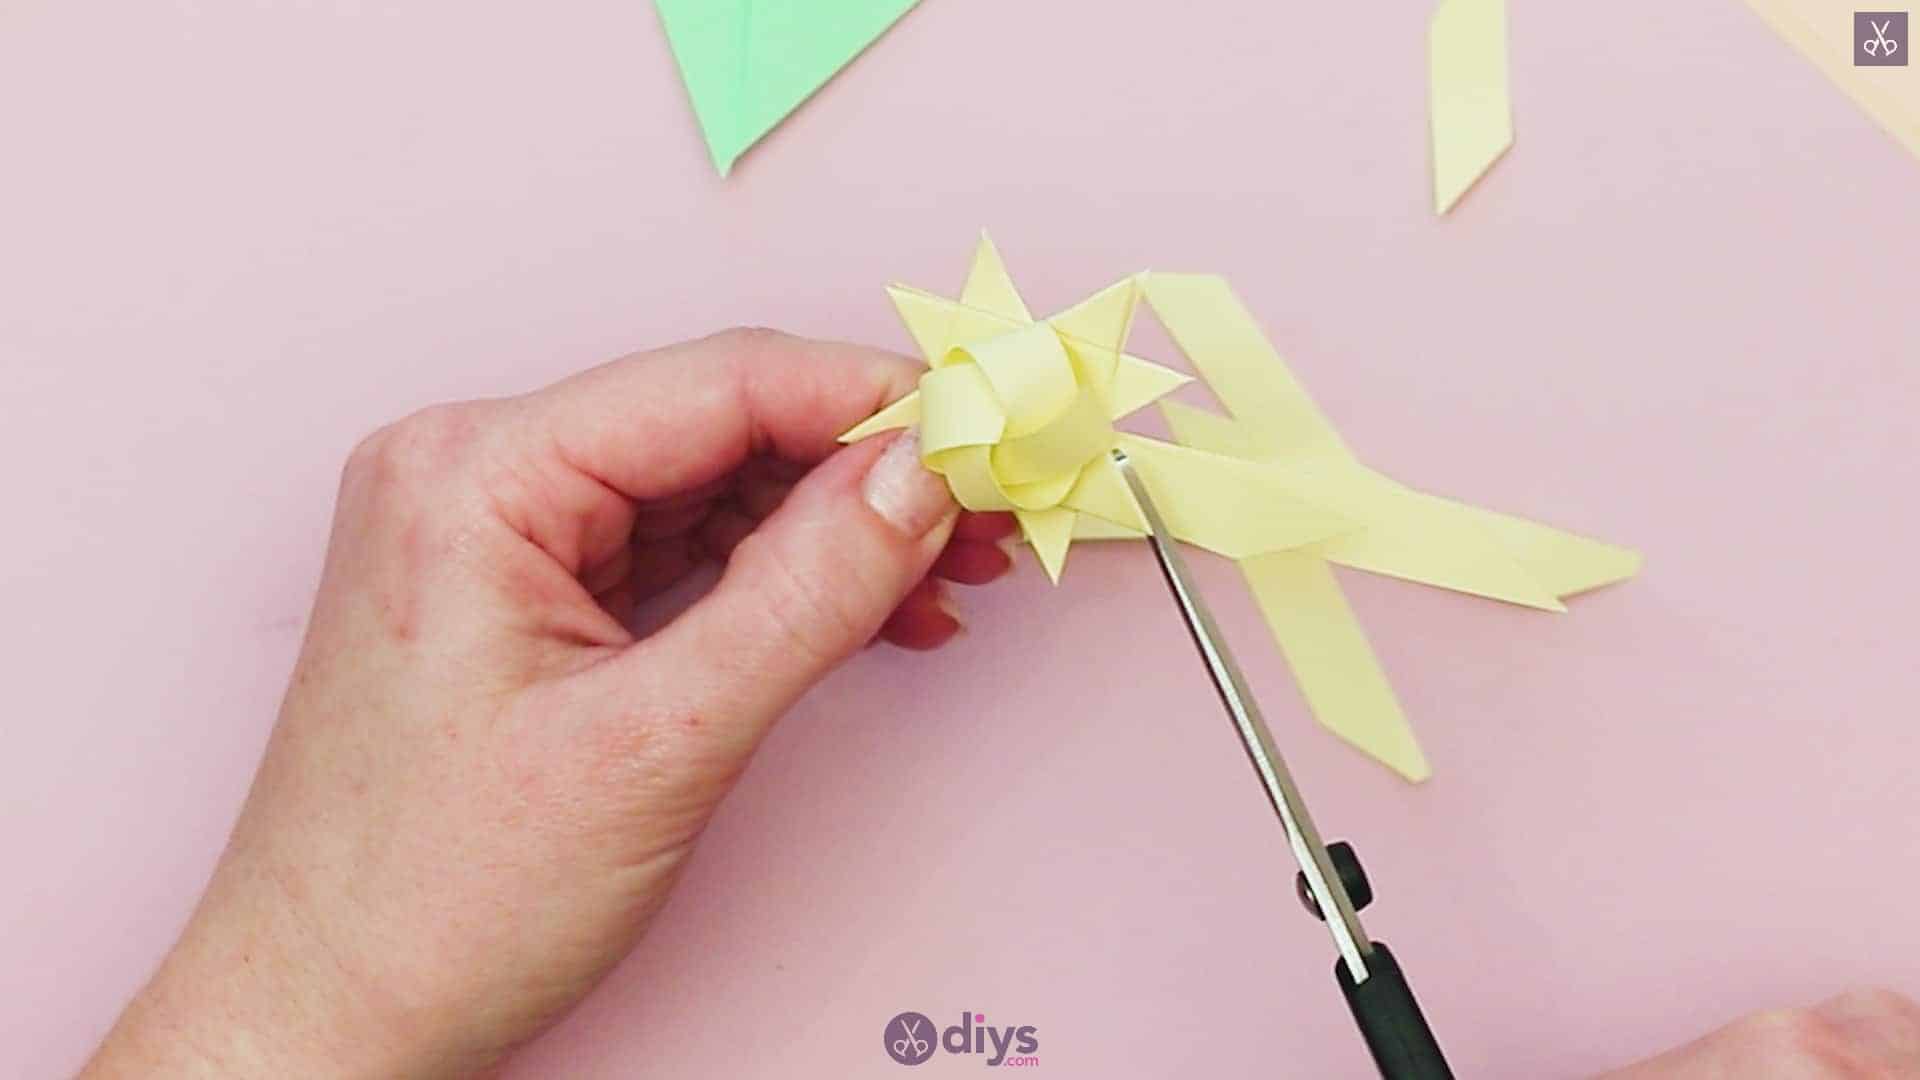 Diy origami flower art step 8a